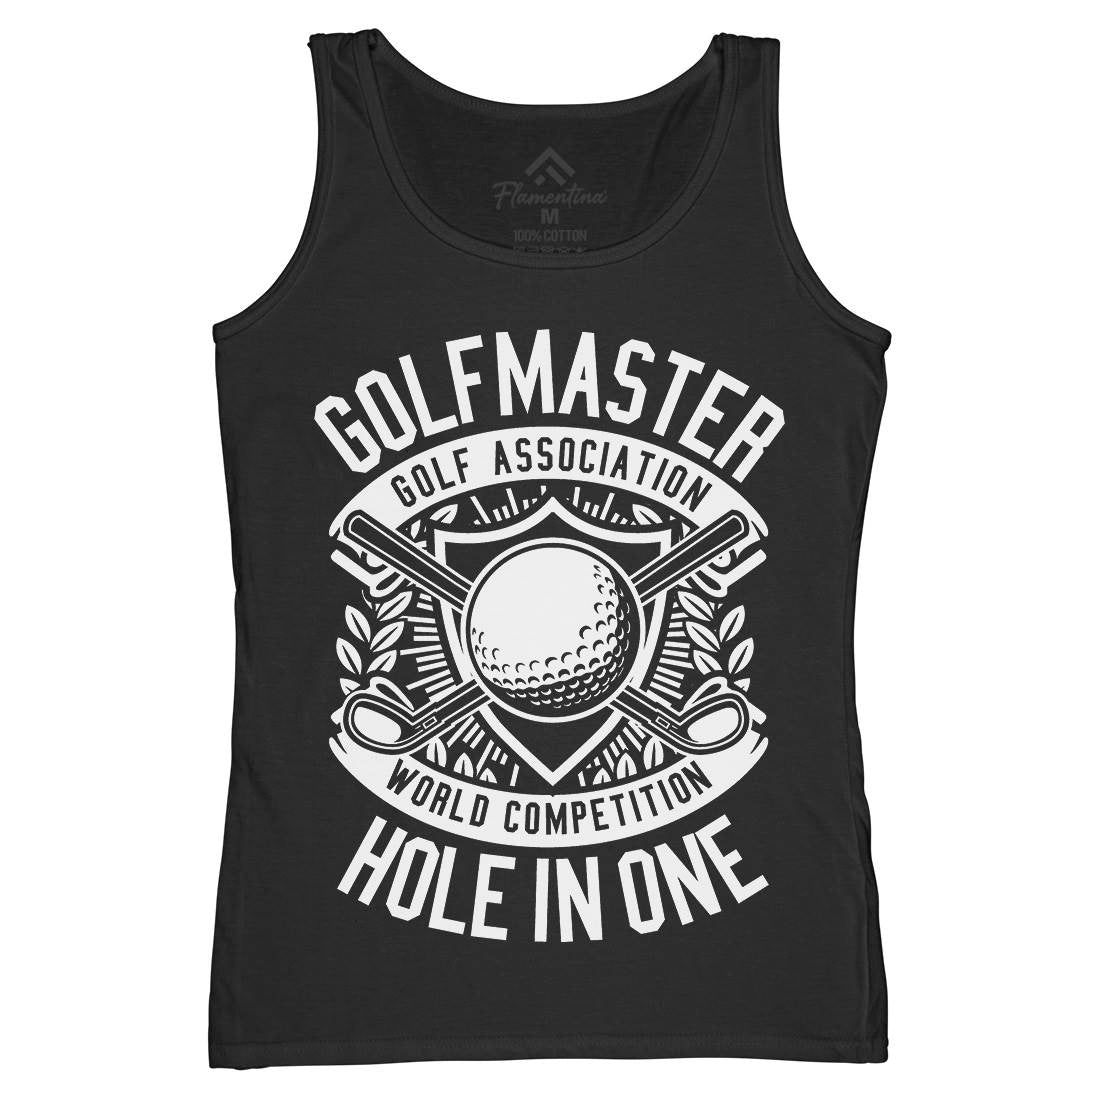 Golf Master Womens Organic Tank Top Vest Sport B547